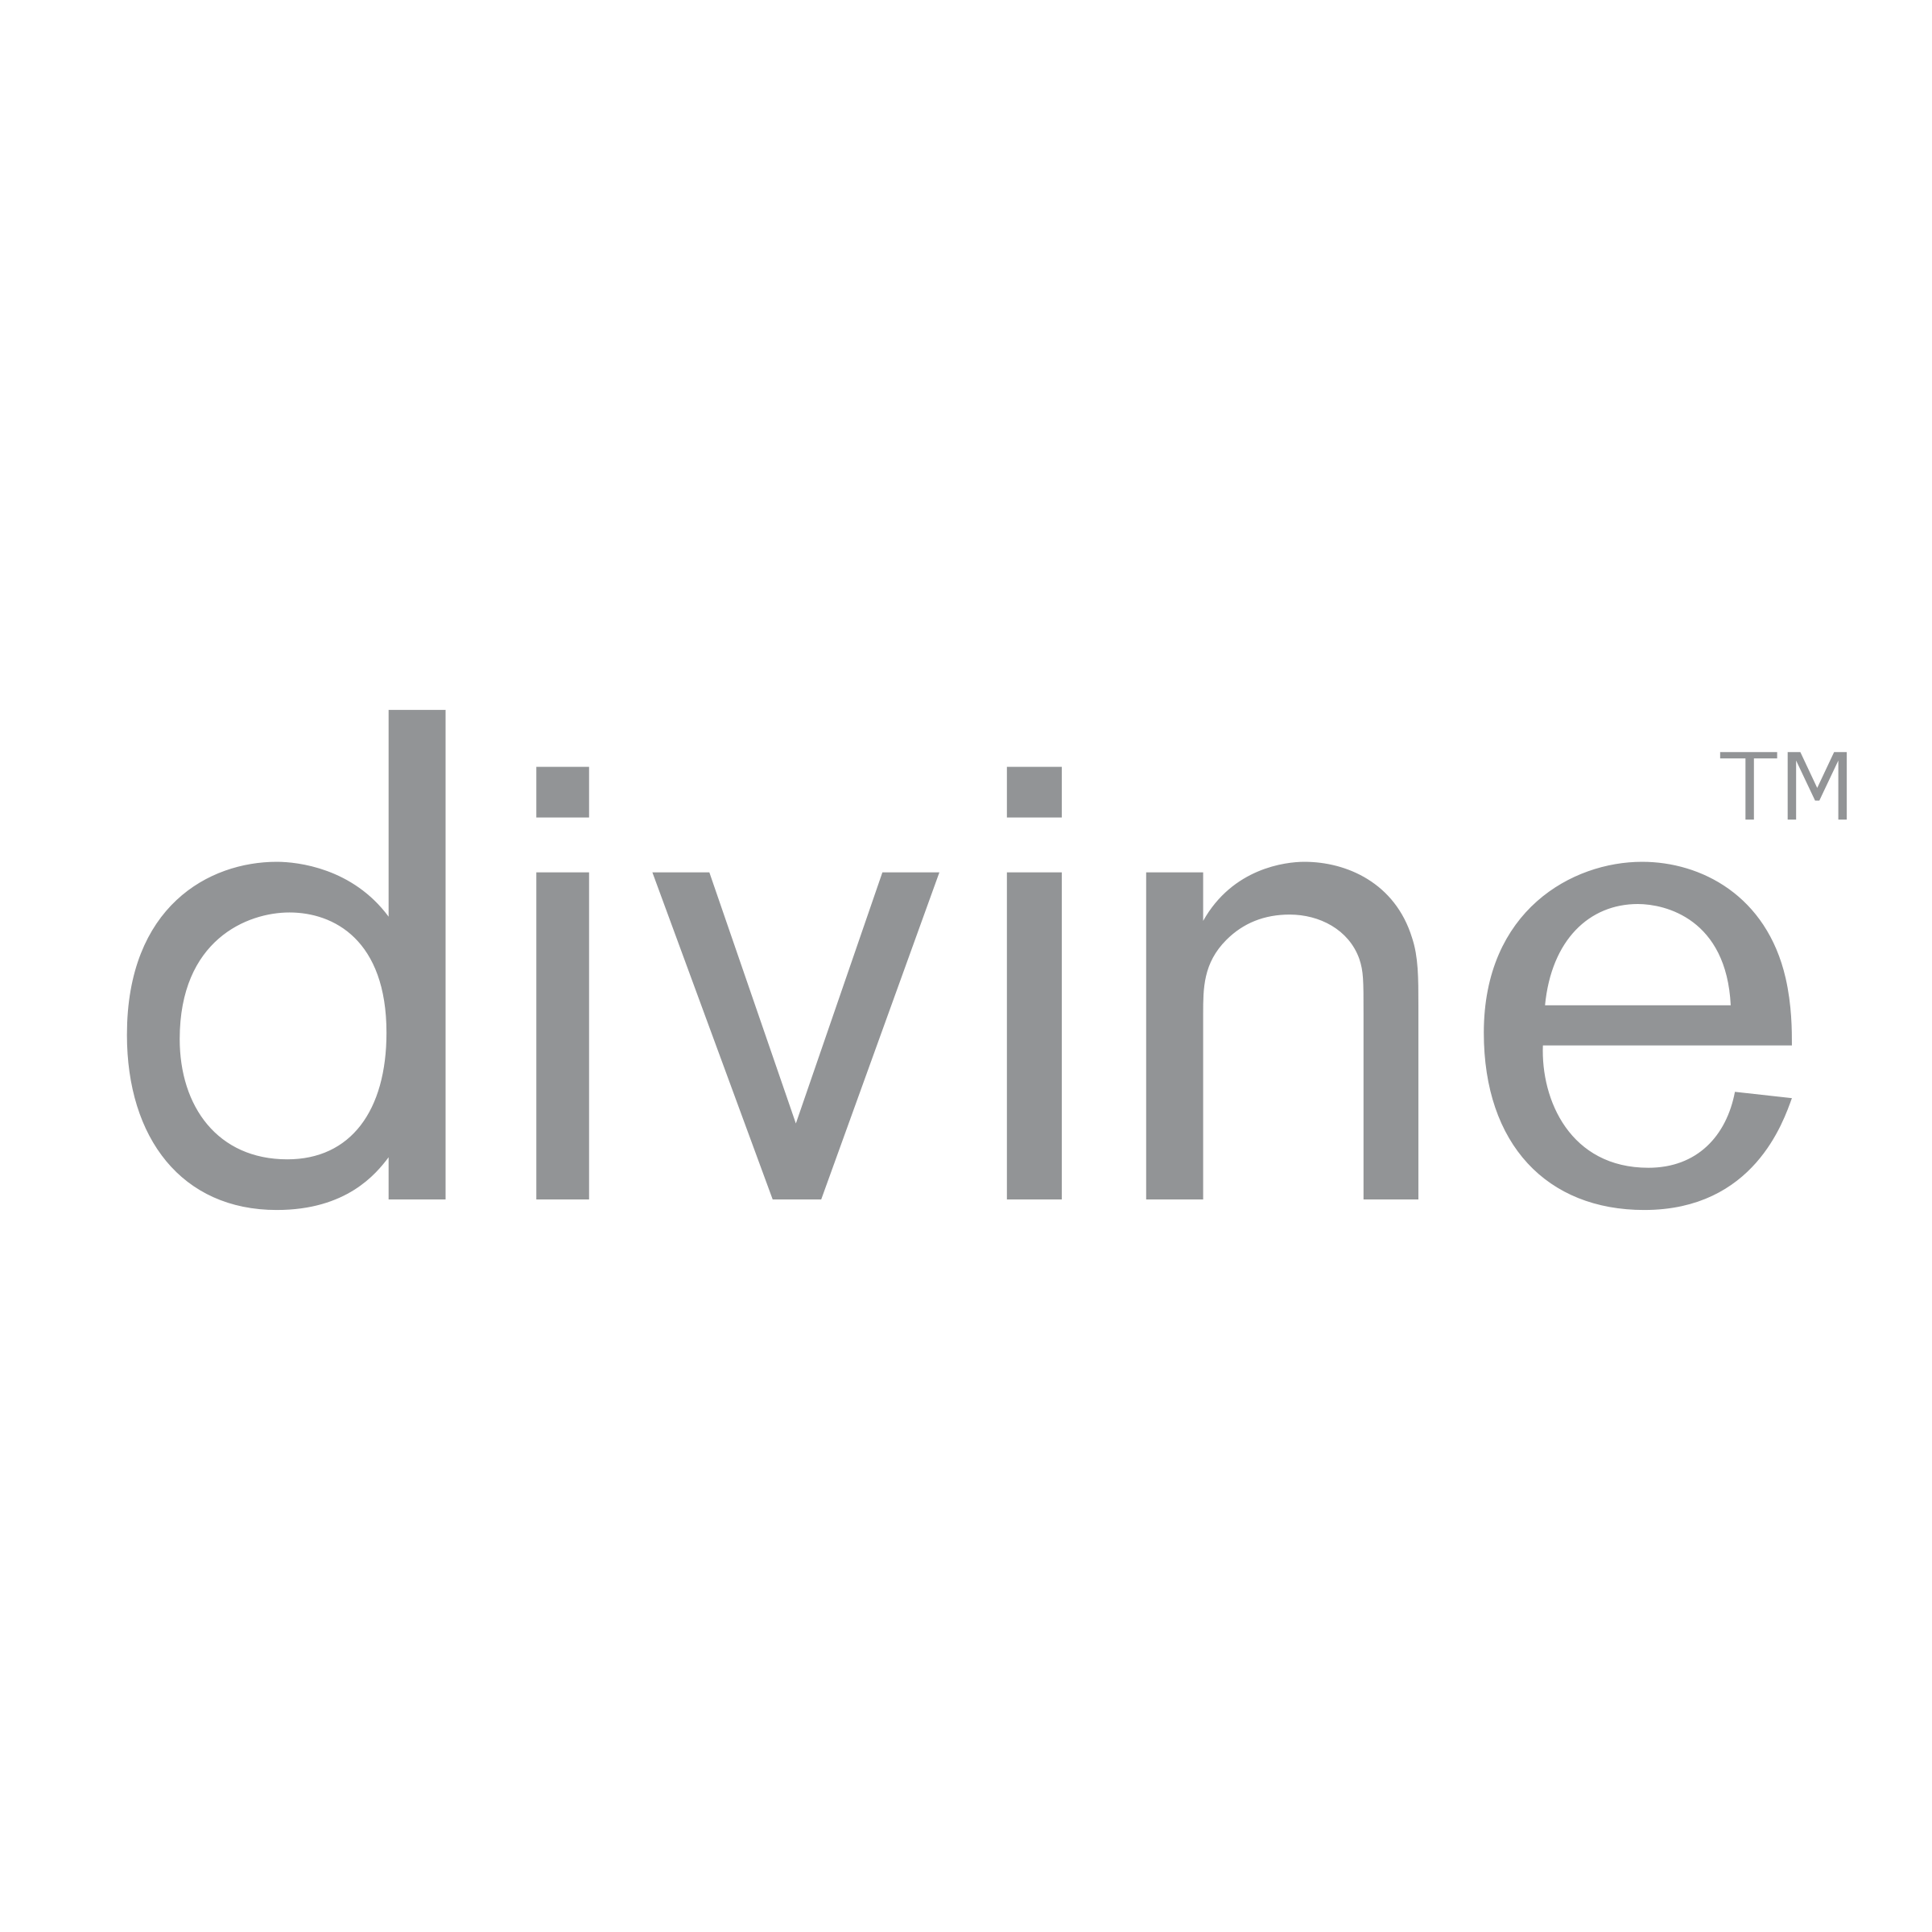 Divine Logo - Divine Logo PNG Transparent & SVG Vector - Freebie Supply